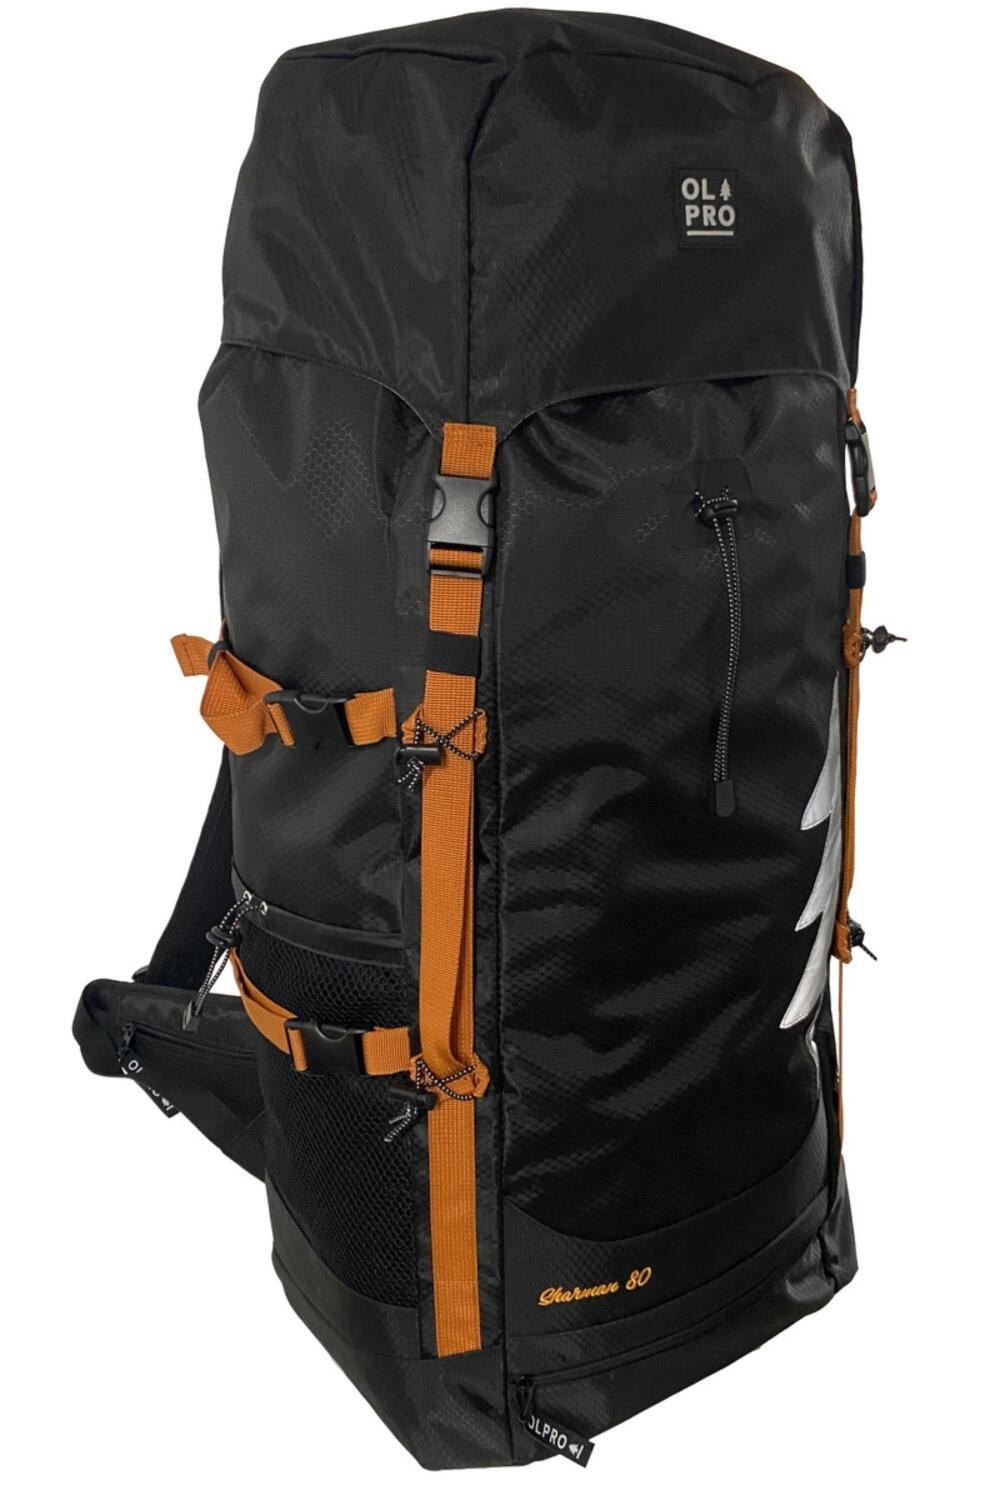 OLPRO 80L Rucksack Bag Black 1/4